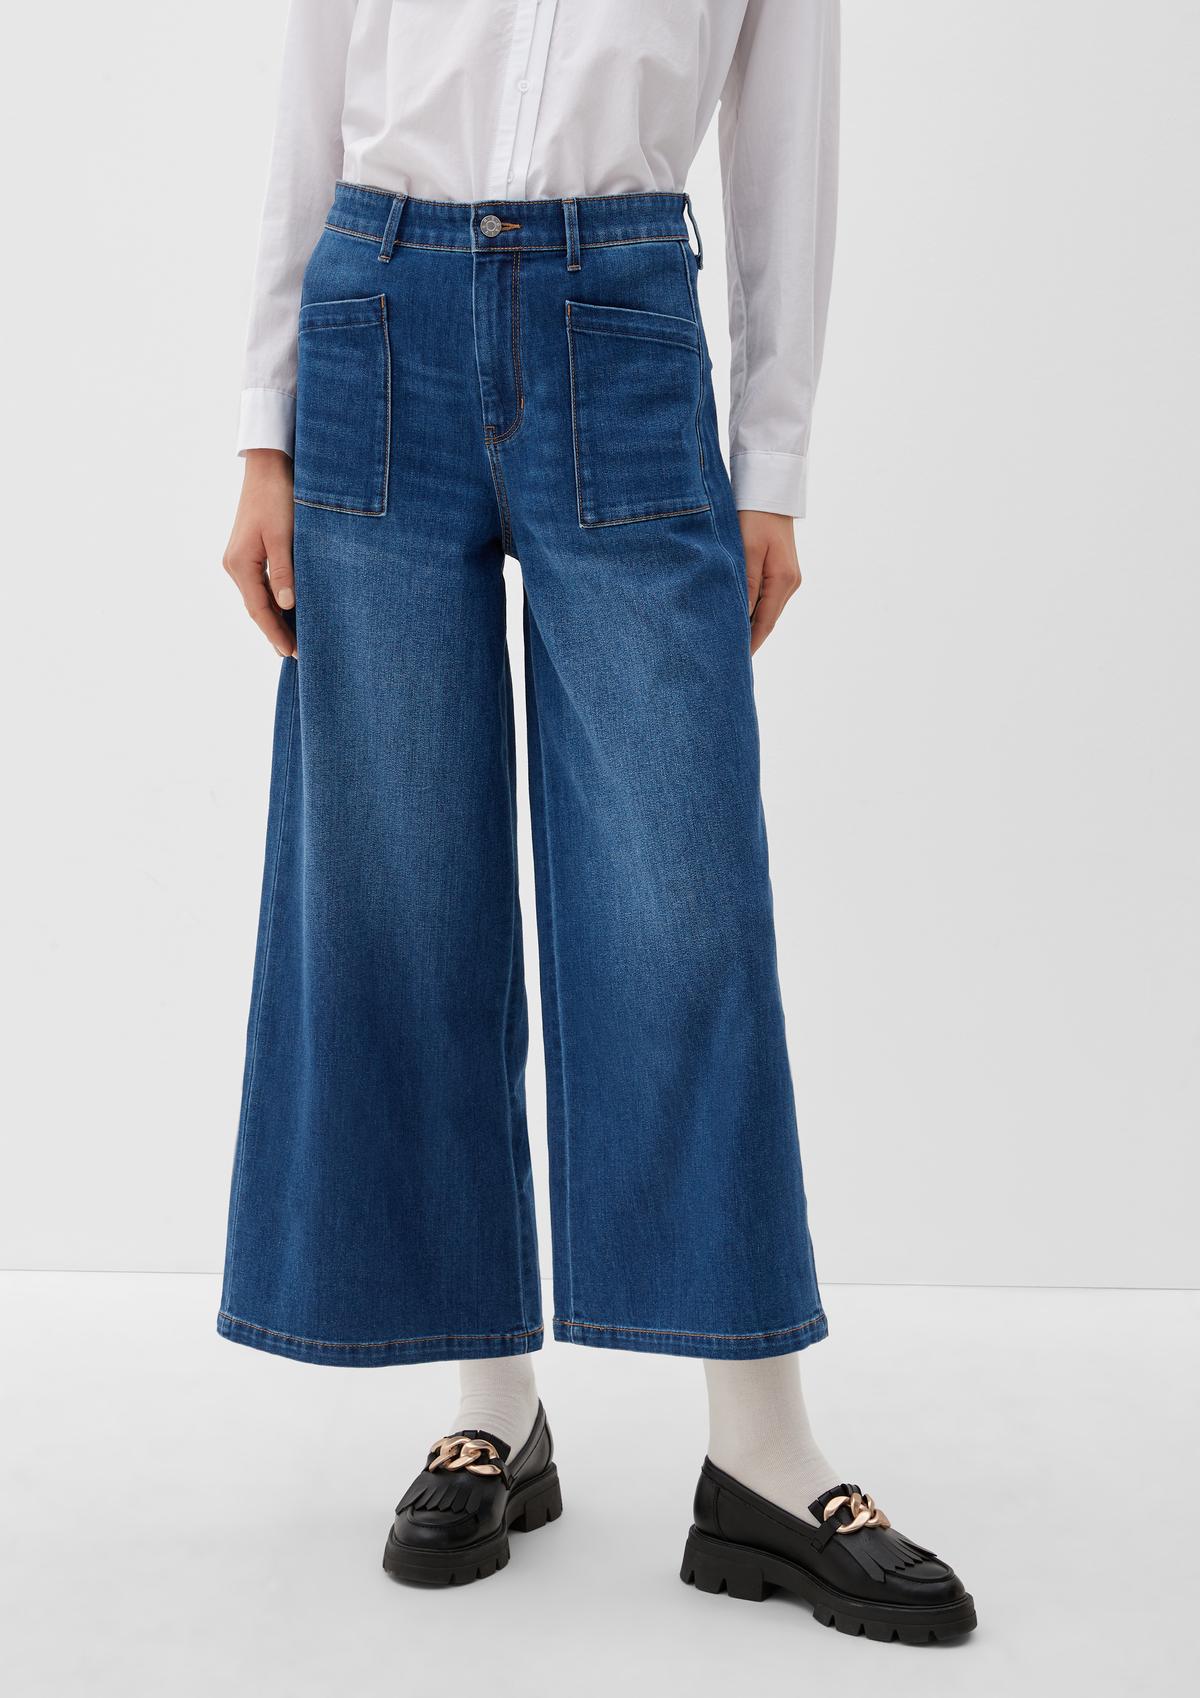 Jeans-Culotte Suri High / - Regular Wide s. Oliver Fit Rise | dunkelblau Leg / 